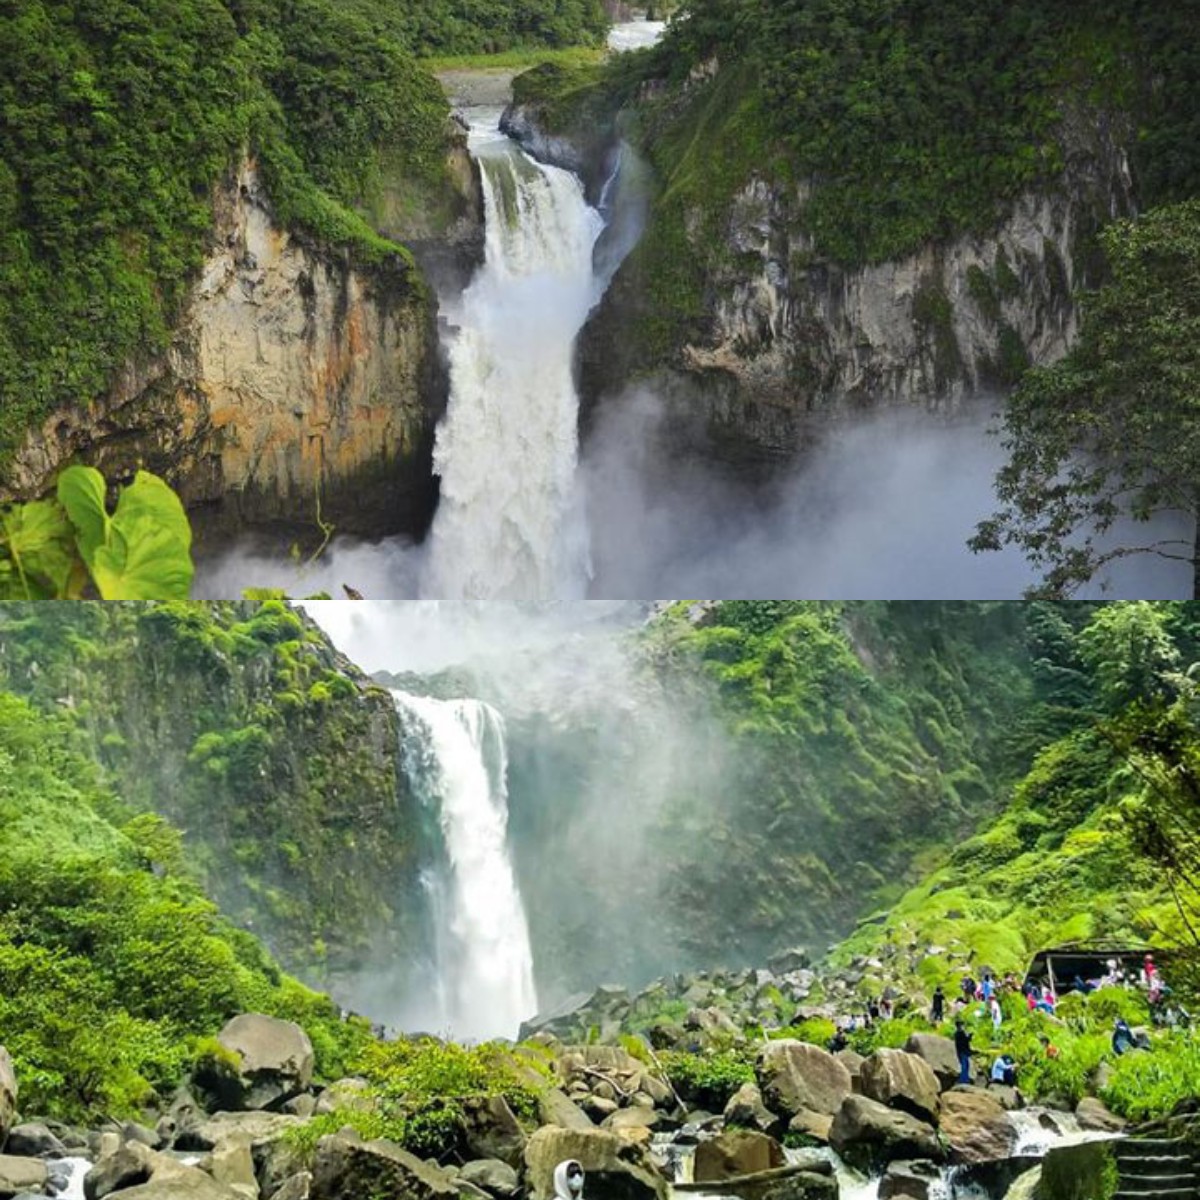 Belum Banyak yang Tahu Jika Air Terjun Tertinggi di Indonesia Terletak di Sumatera Utara!